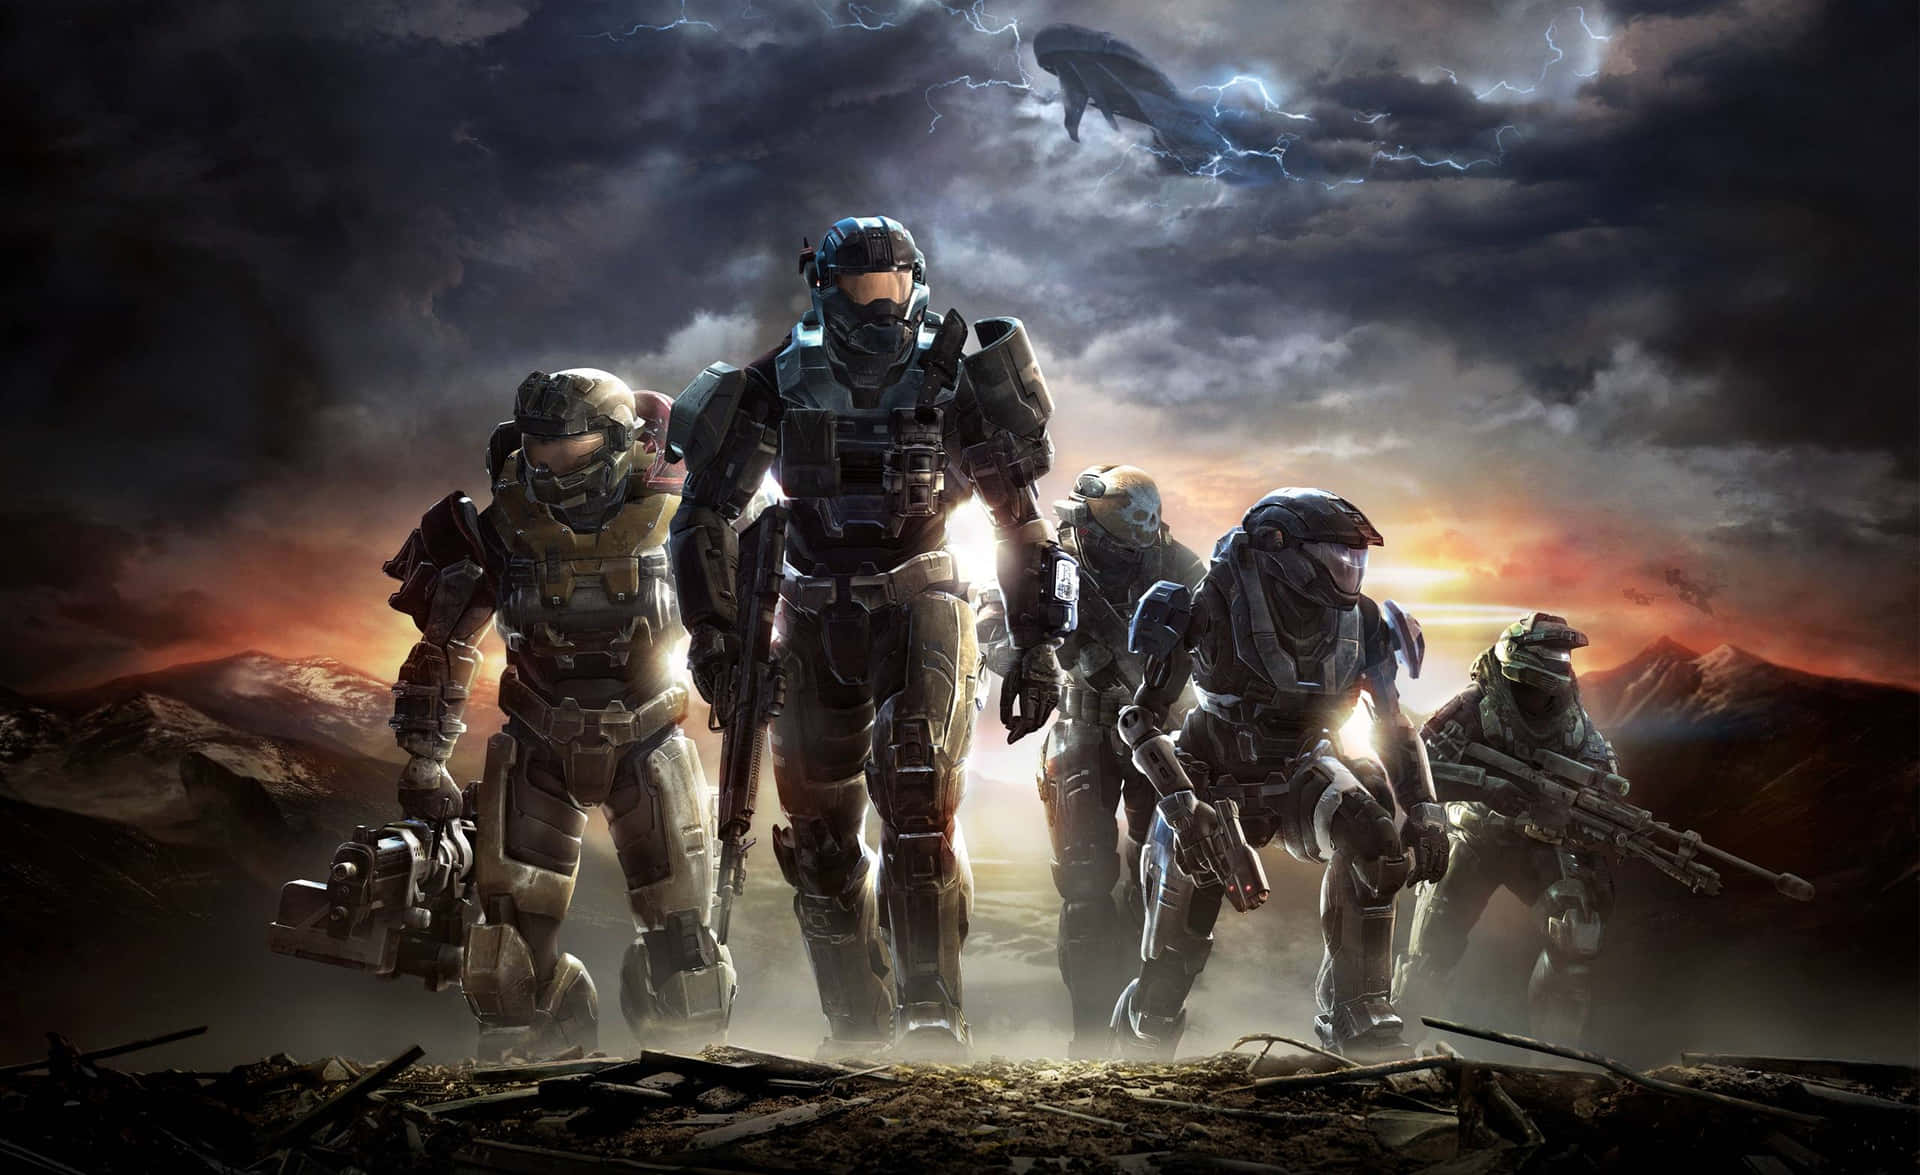 Caption: Fierce Halo Spartans Ready for Battle Wallpaper